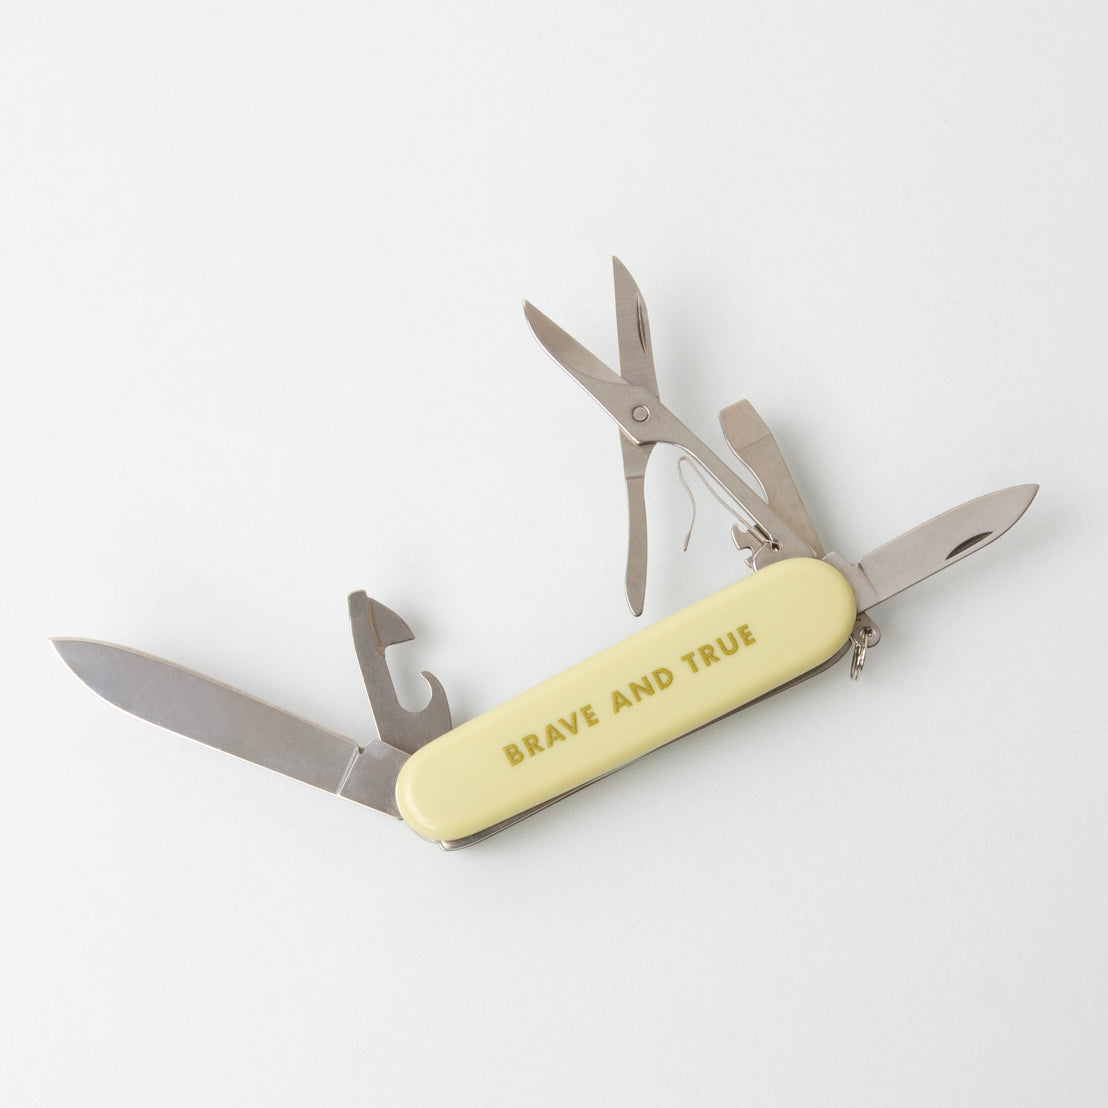 Izola Pocket Knife - Brave and True